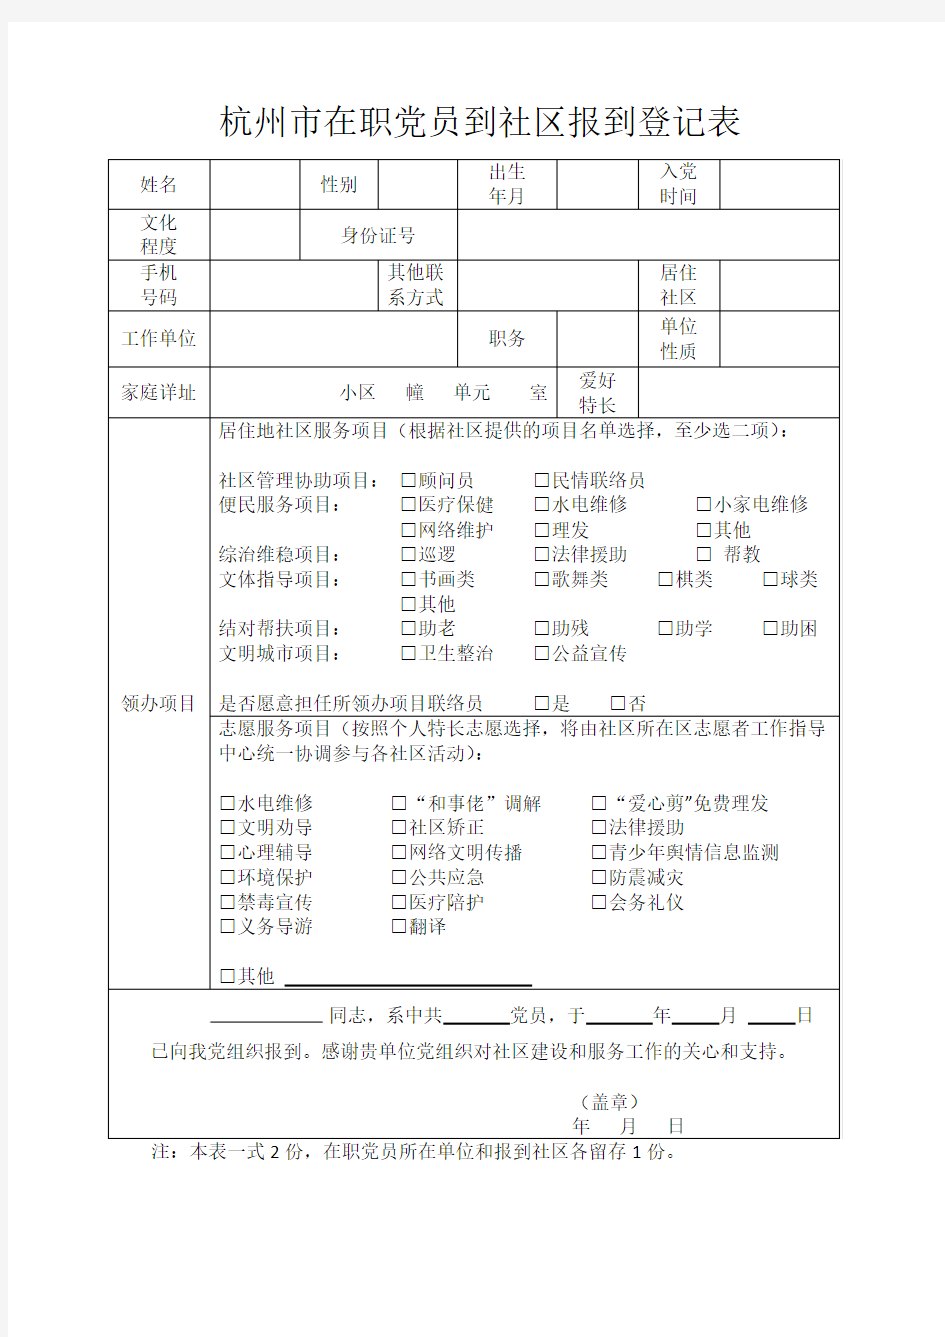 Z杭州市在职党员到社区报到登记表